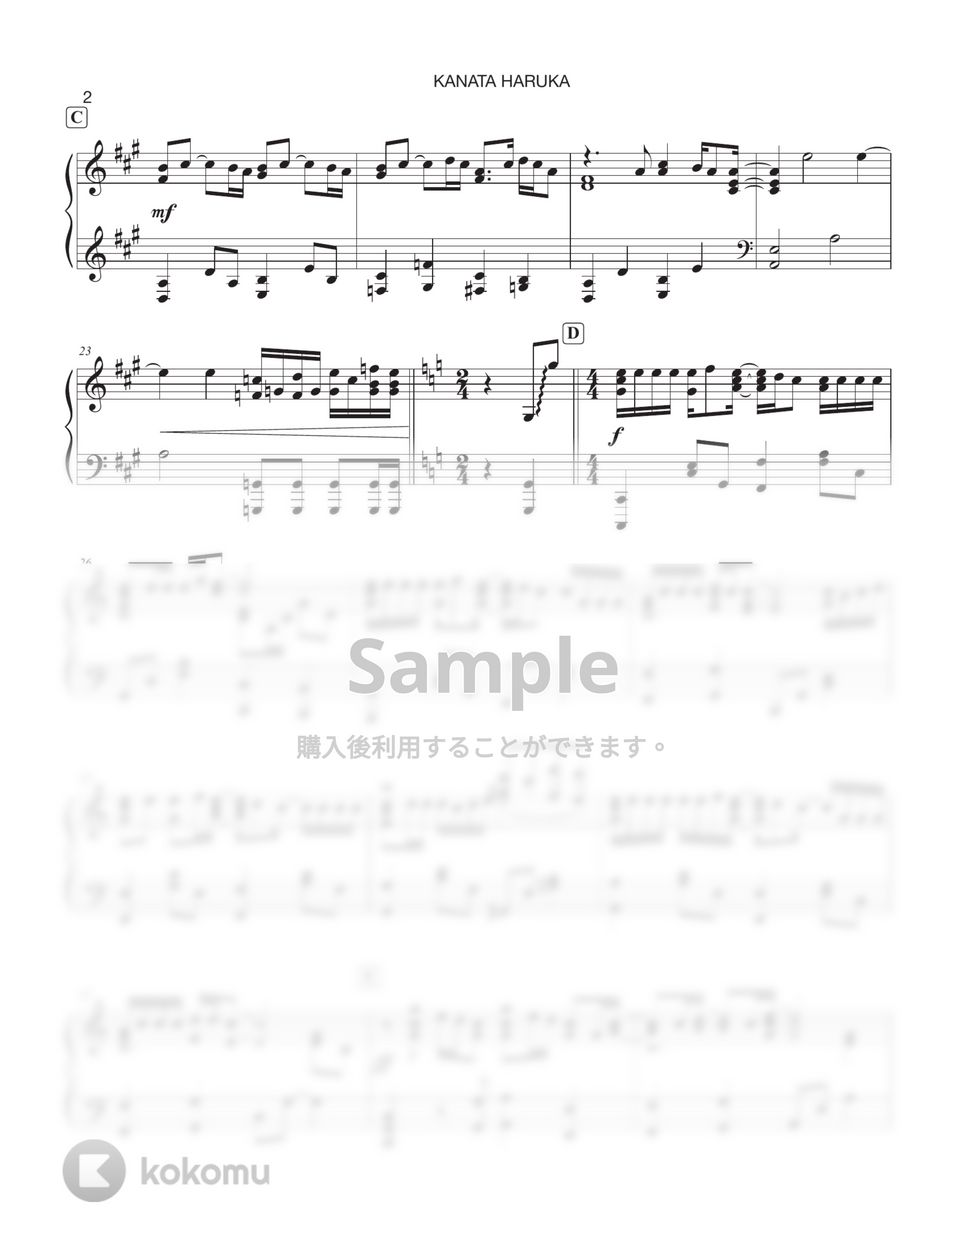 RADWIMPS - カナタハルカ (長いバージョンと短いバージョン) by Tully Piano